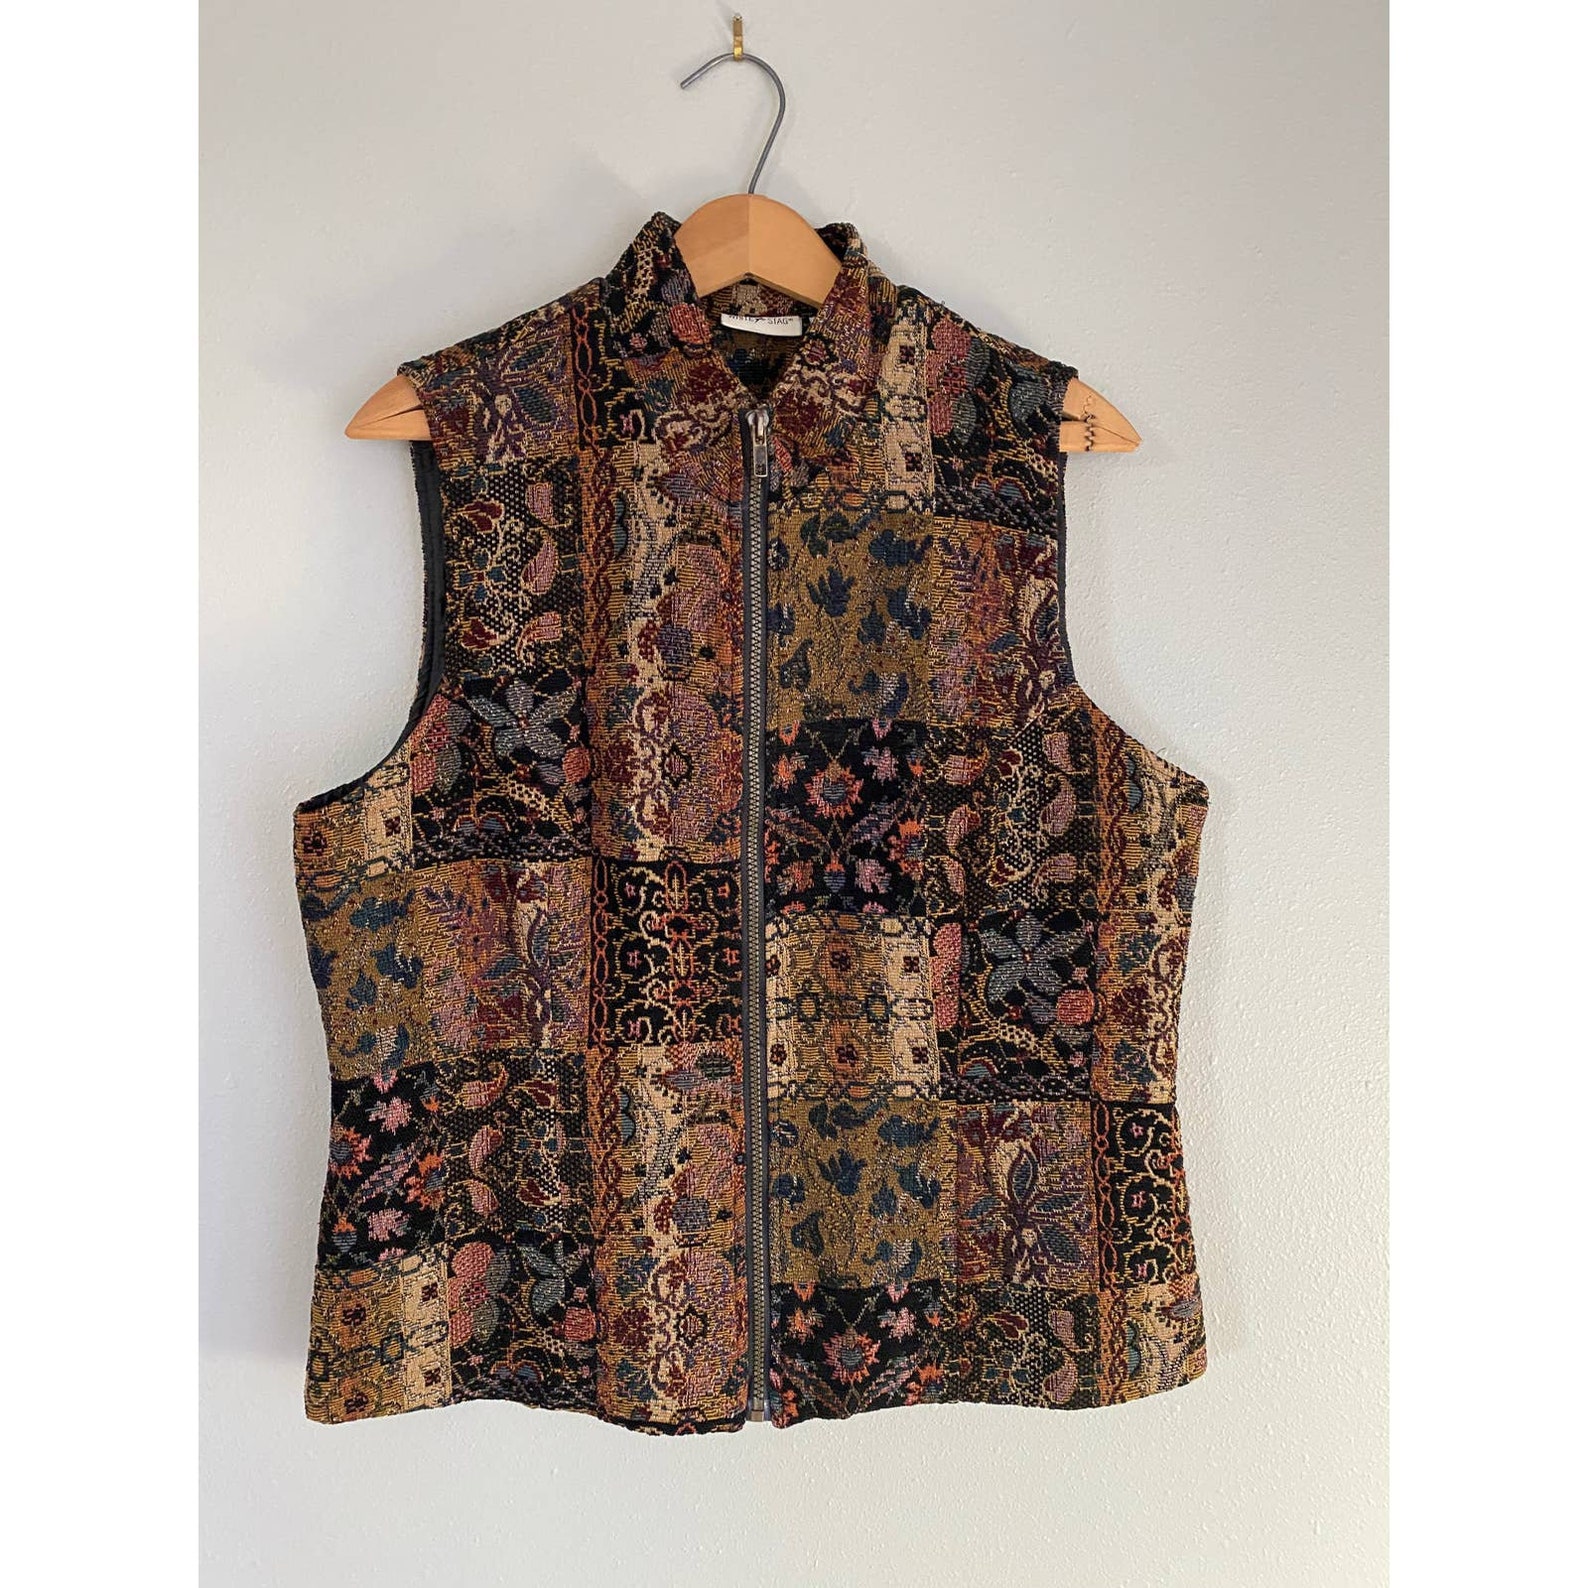 Tapestry vest zip front shirt sz L | Etsy